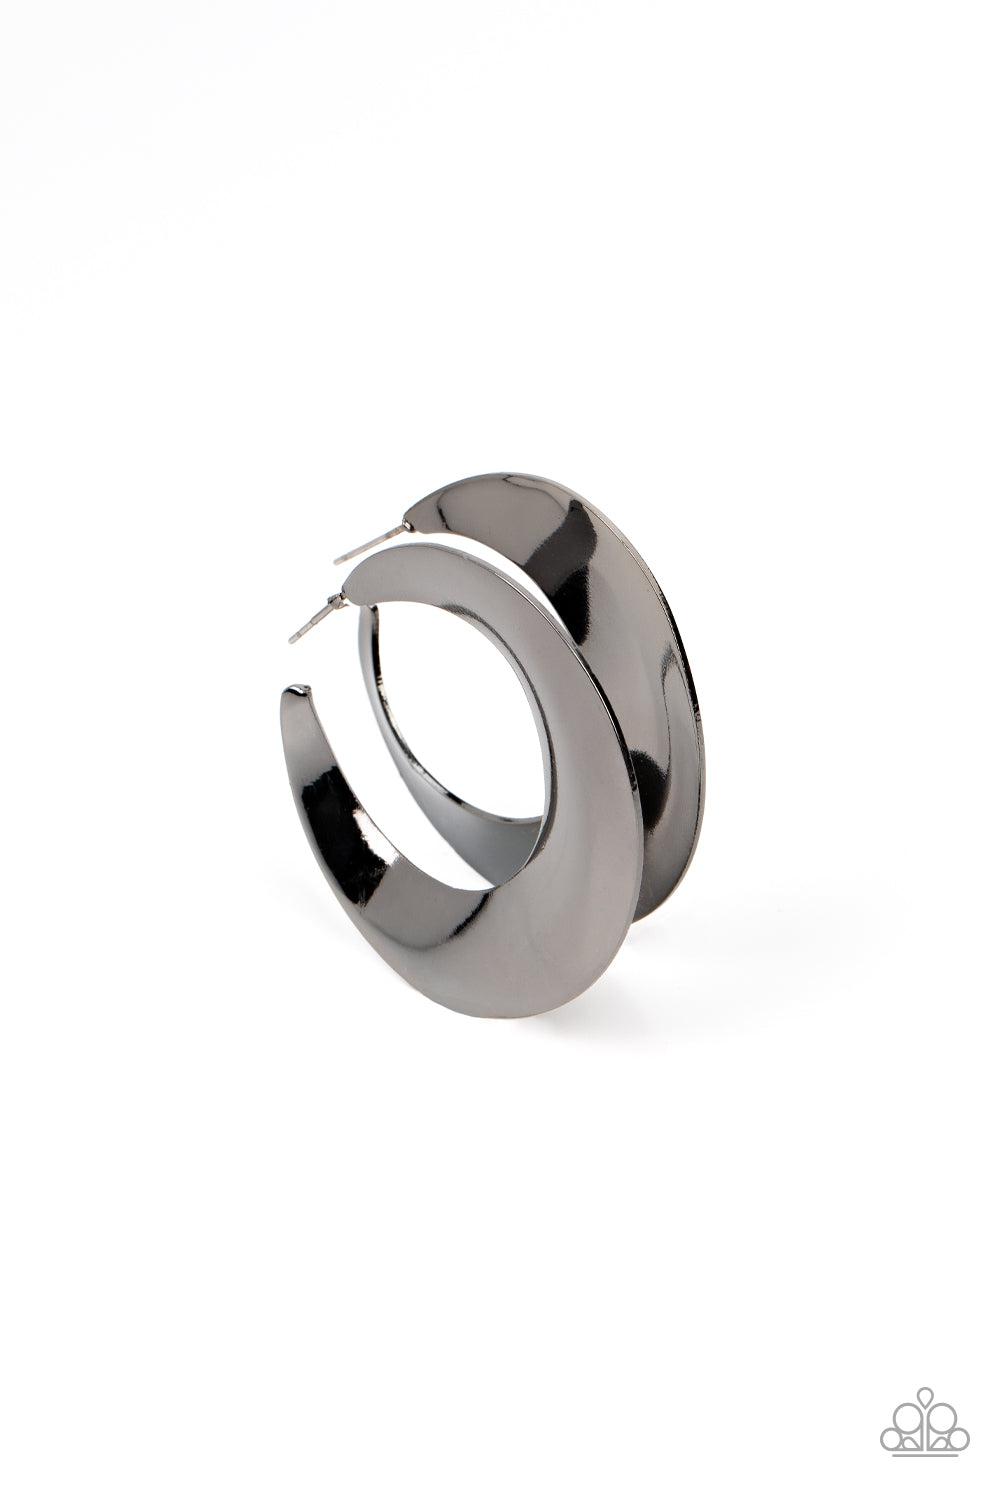 Power Curves Gunmetal Black Hoop Earrings - Paparazzi Accessories- lightbox - CarasShop.com - $5 Jewelry by Cara Jewels